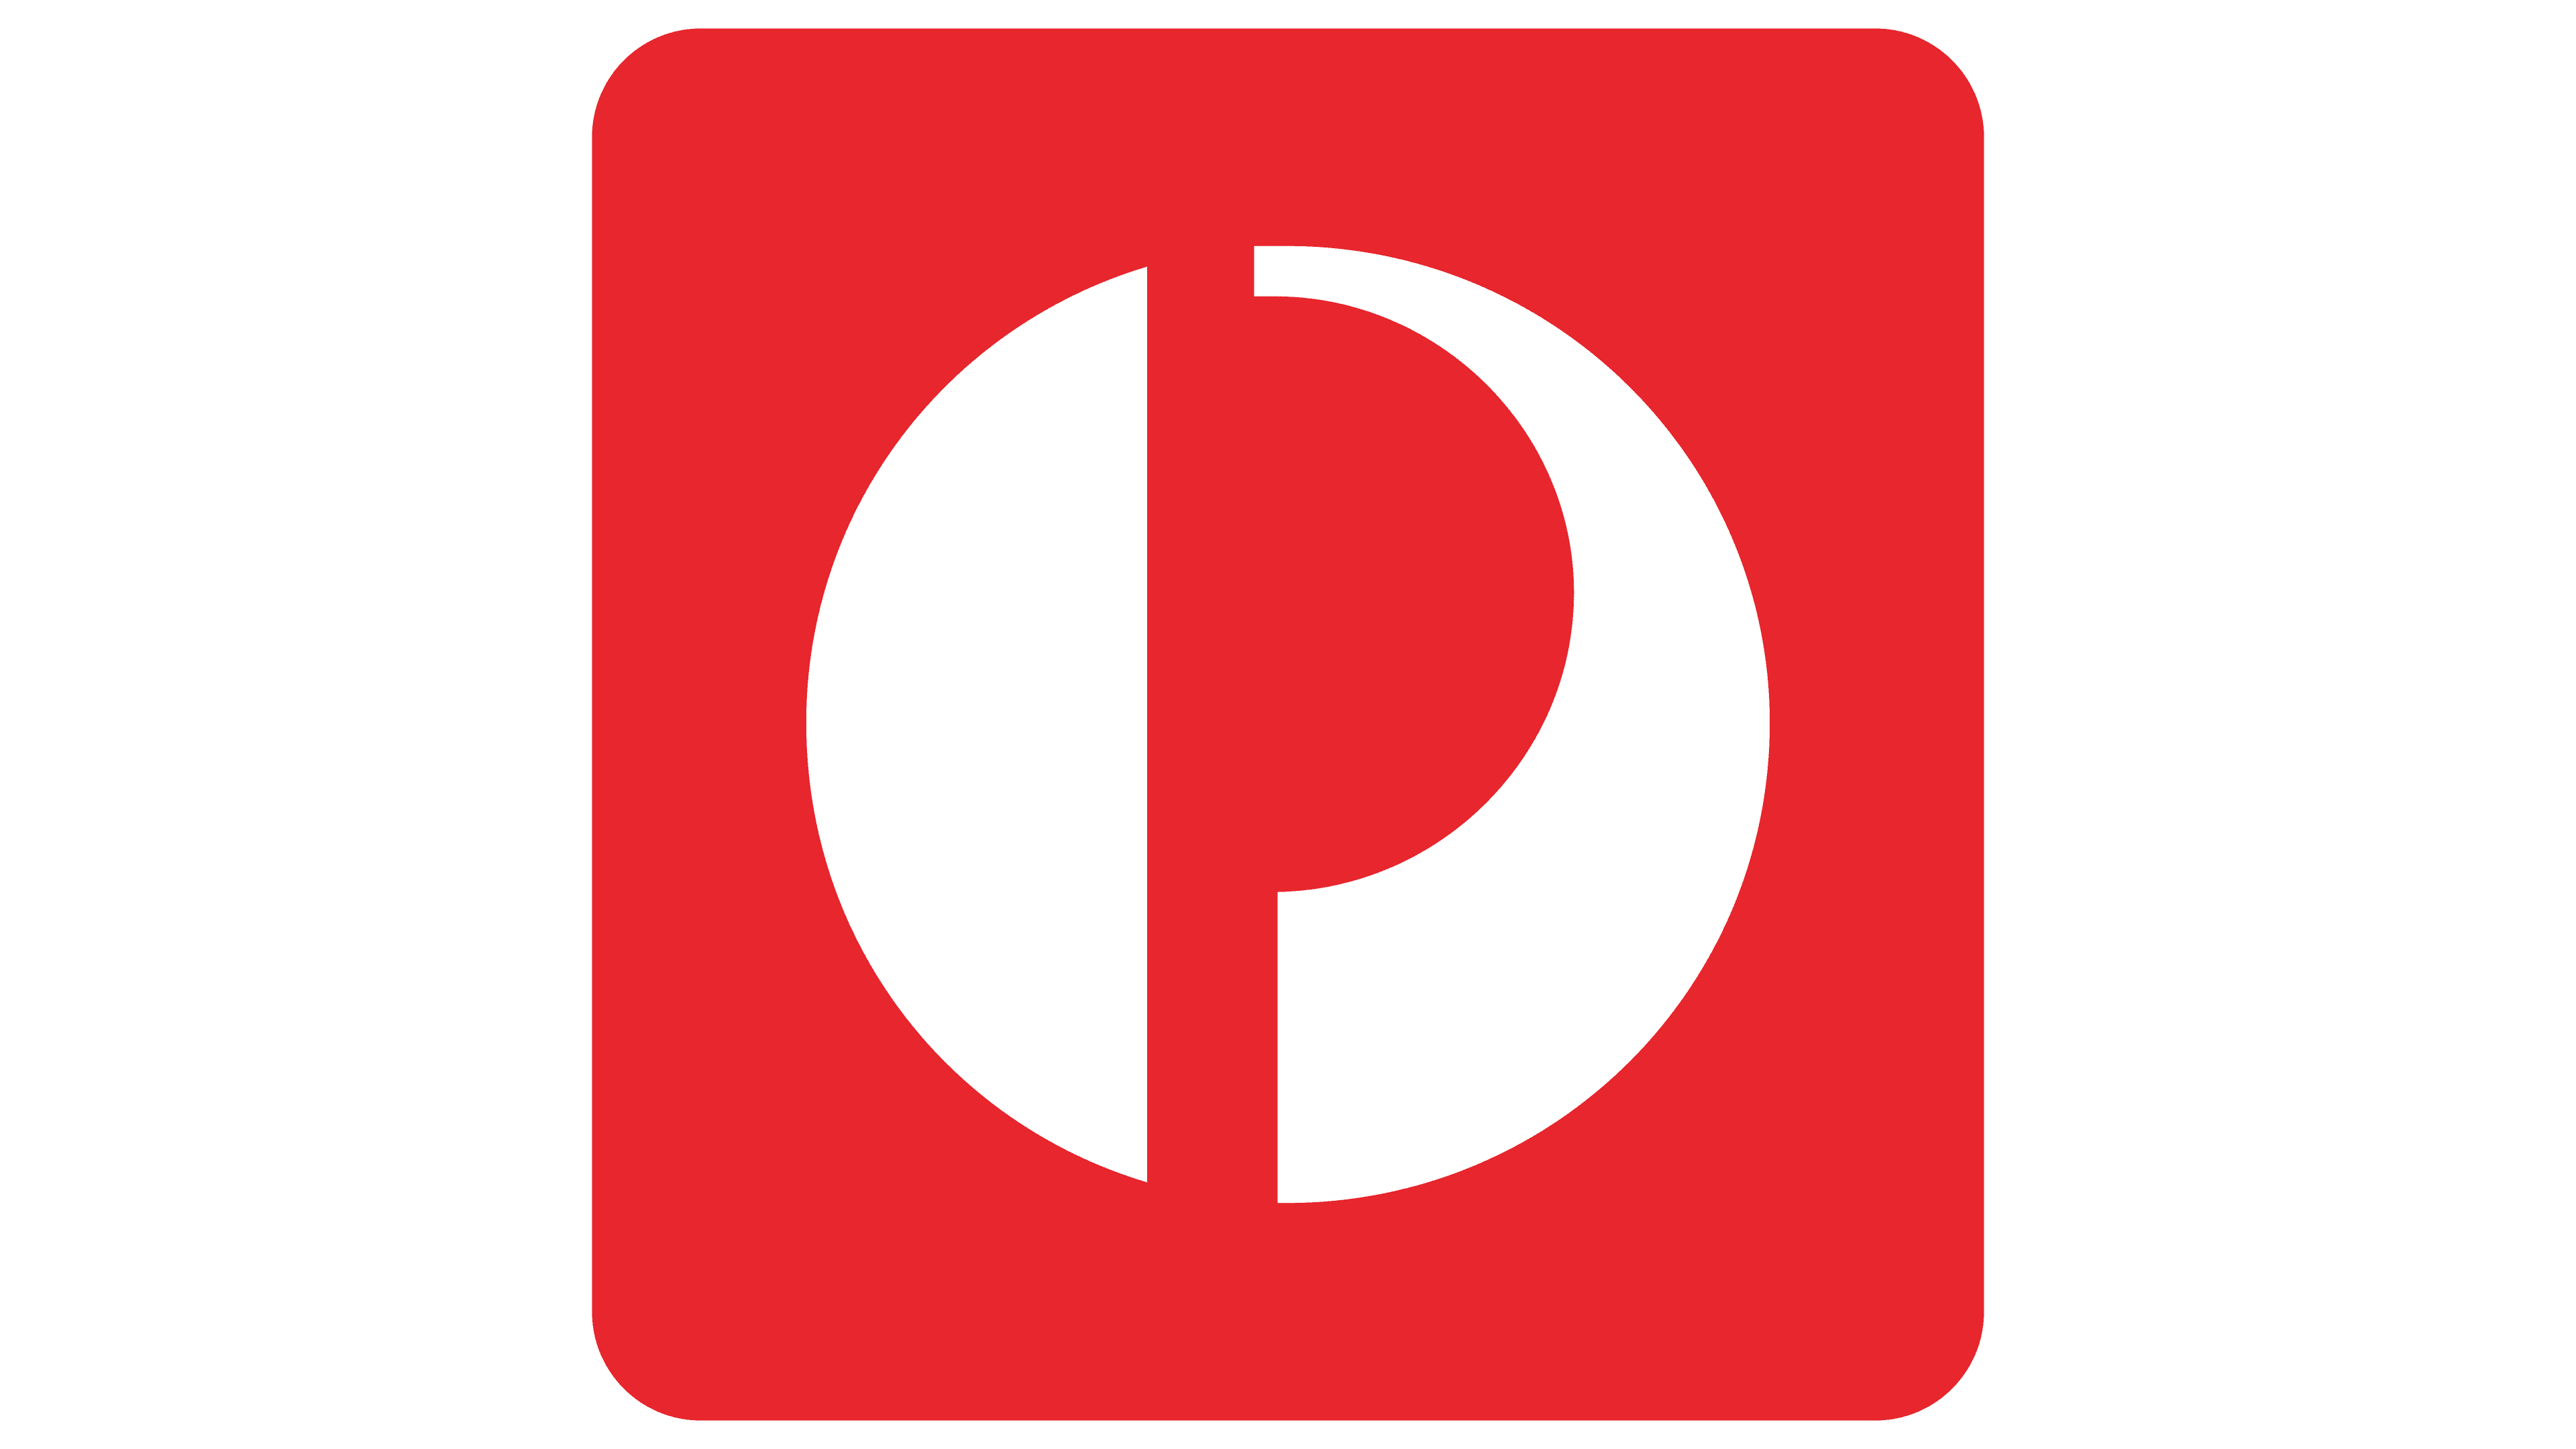 Australia Post Logo, symbol, meaning, history, PNG, brand